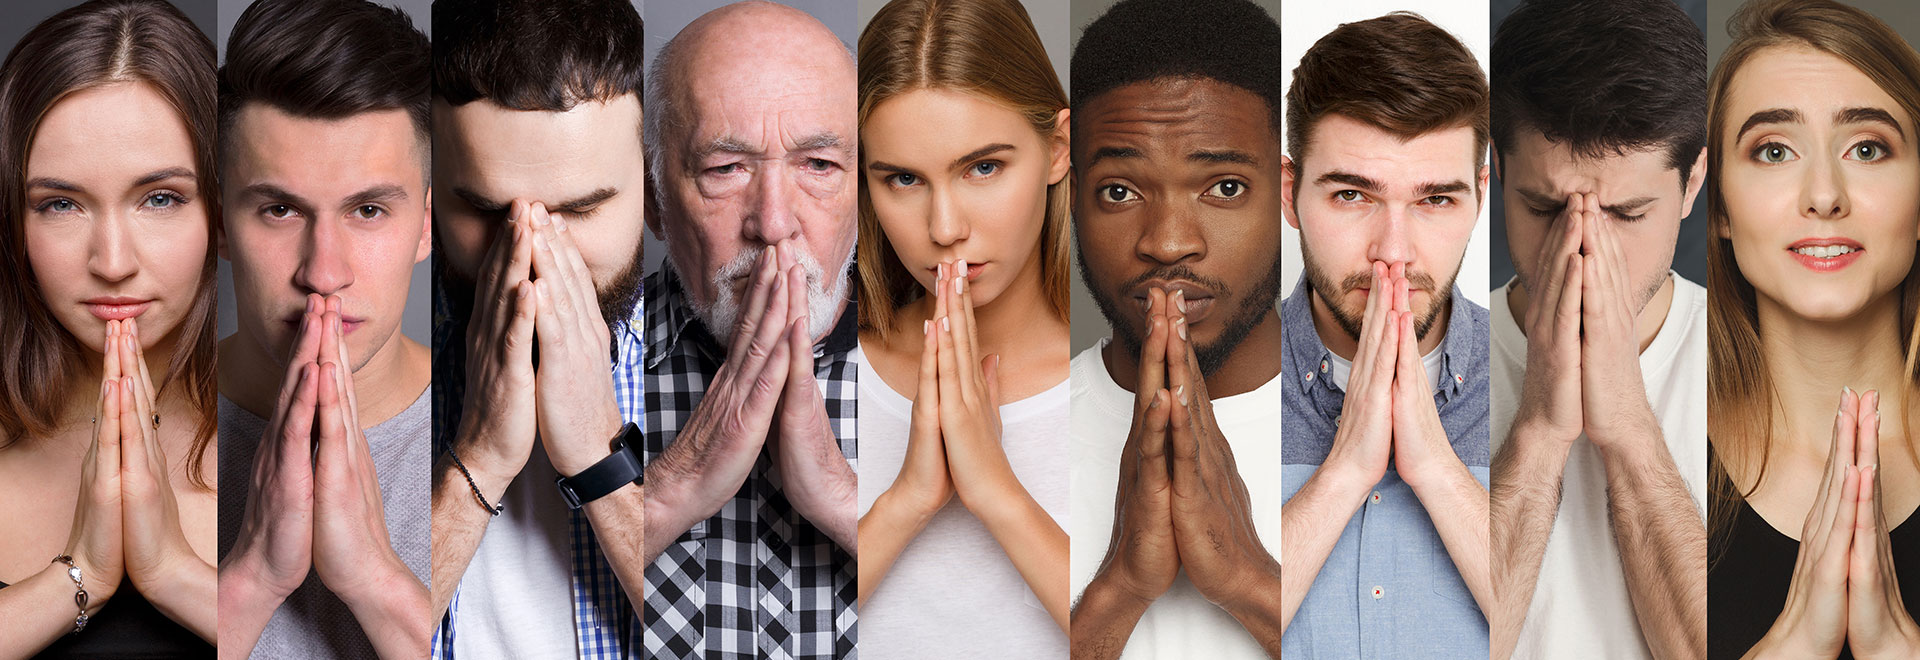 7 vertical images sliced together of diverse people praying